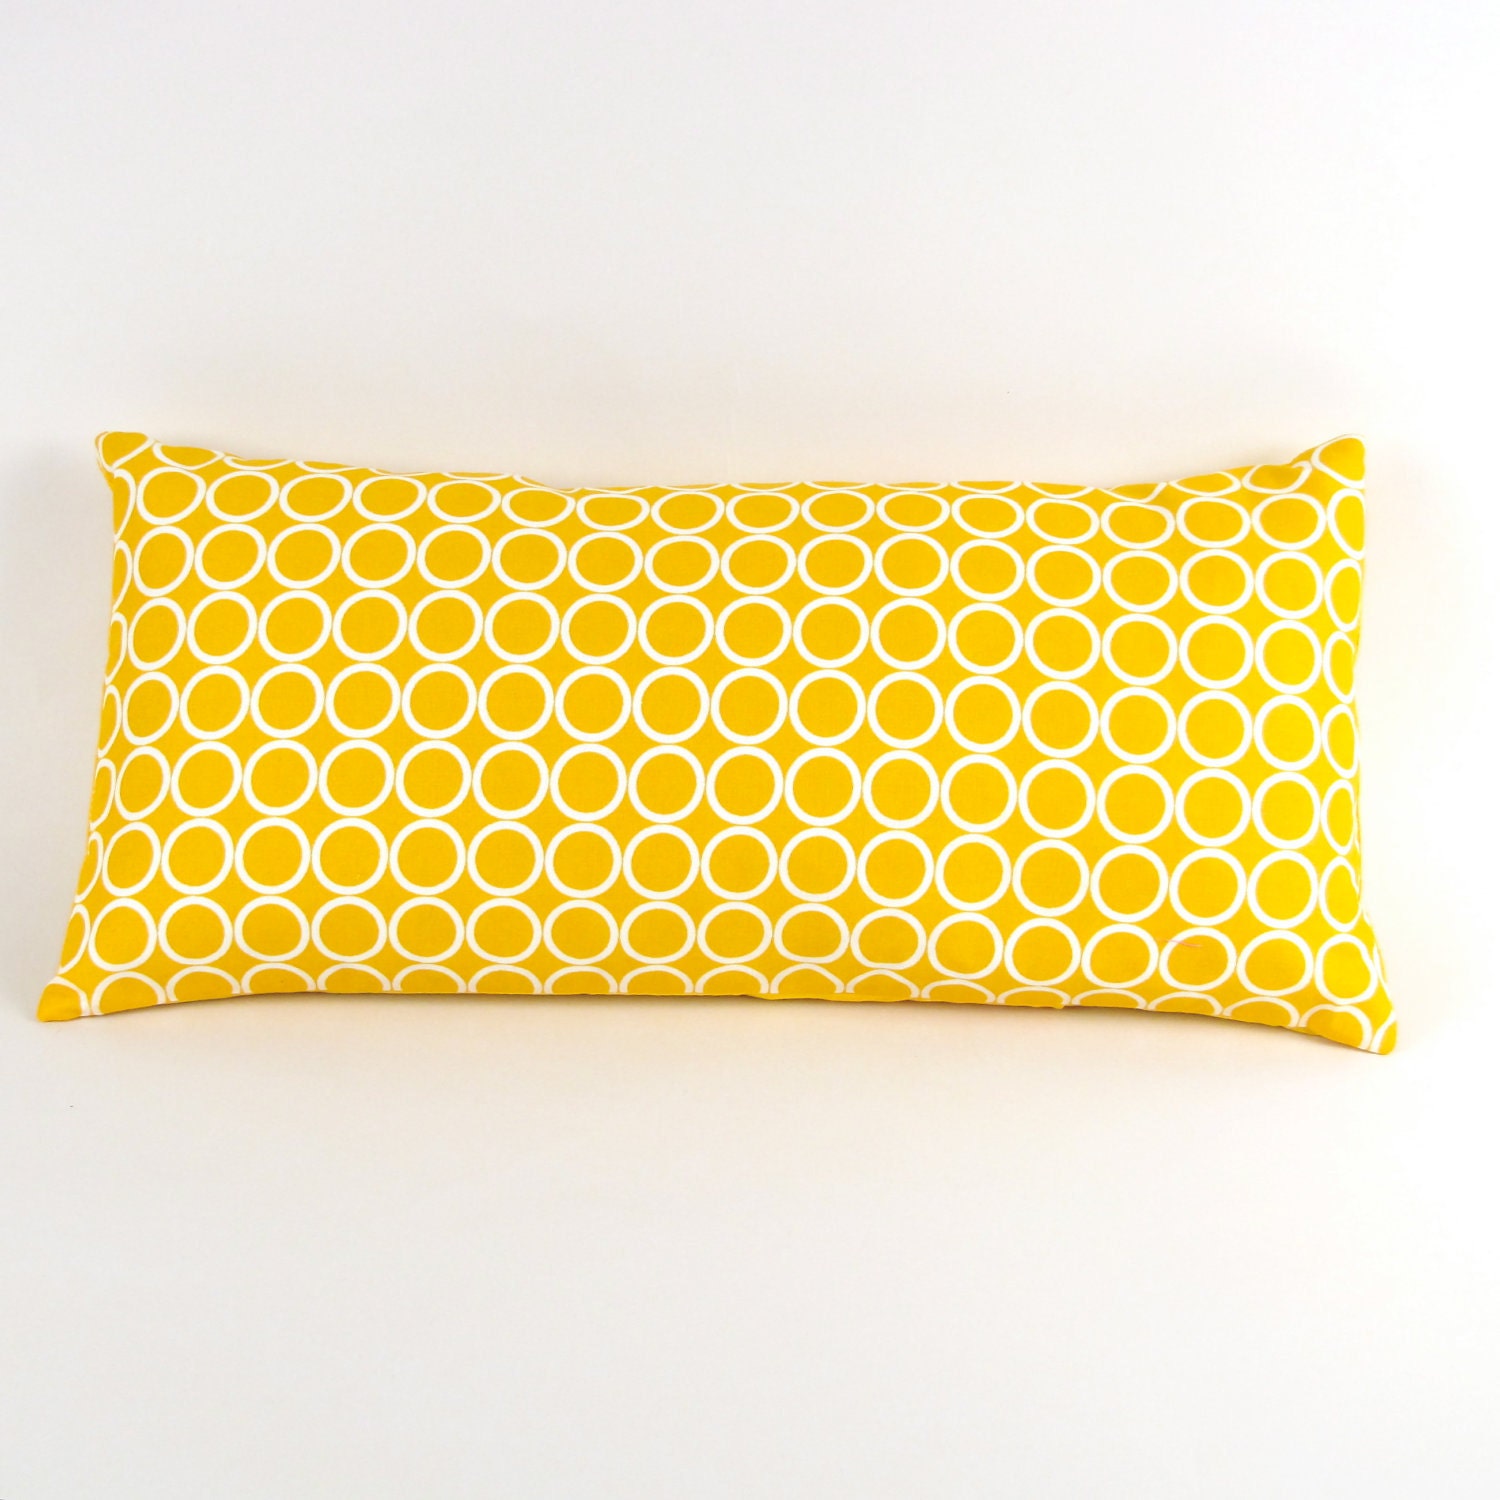 Yellow and White Circles Pillow 8" x 17"